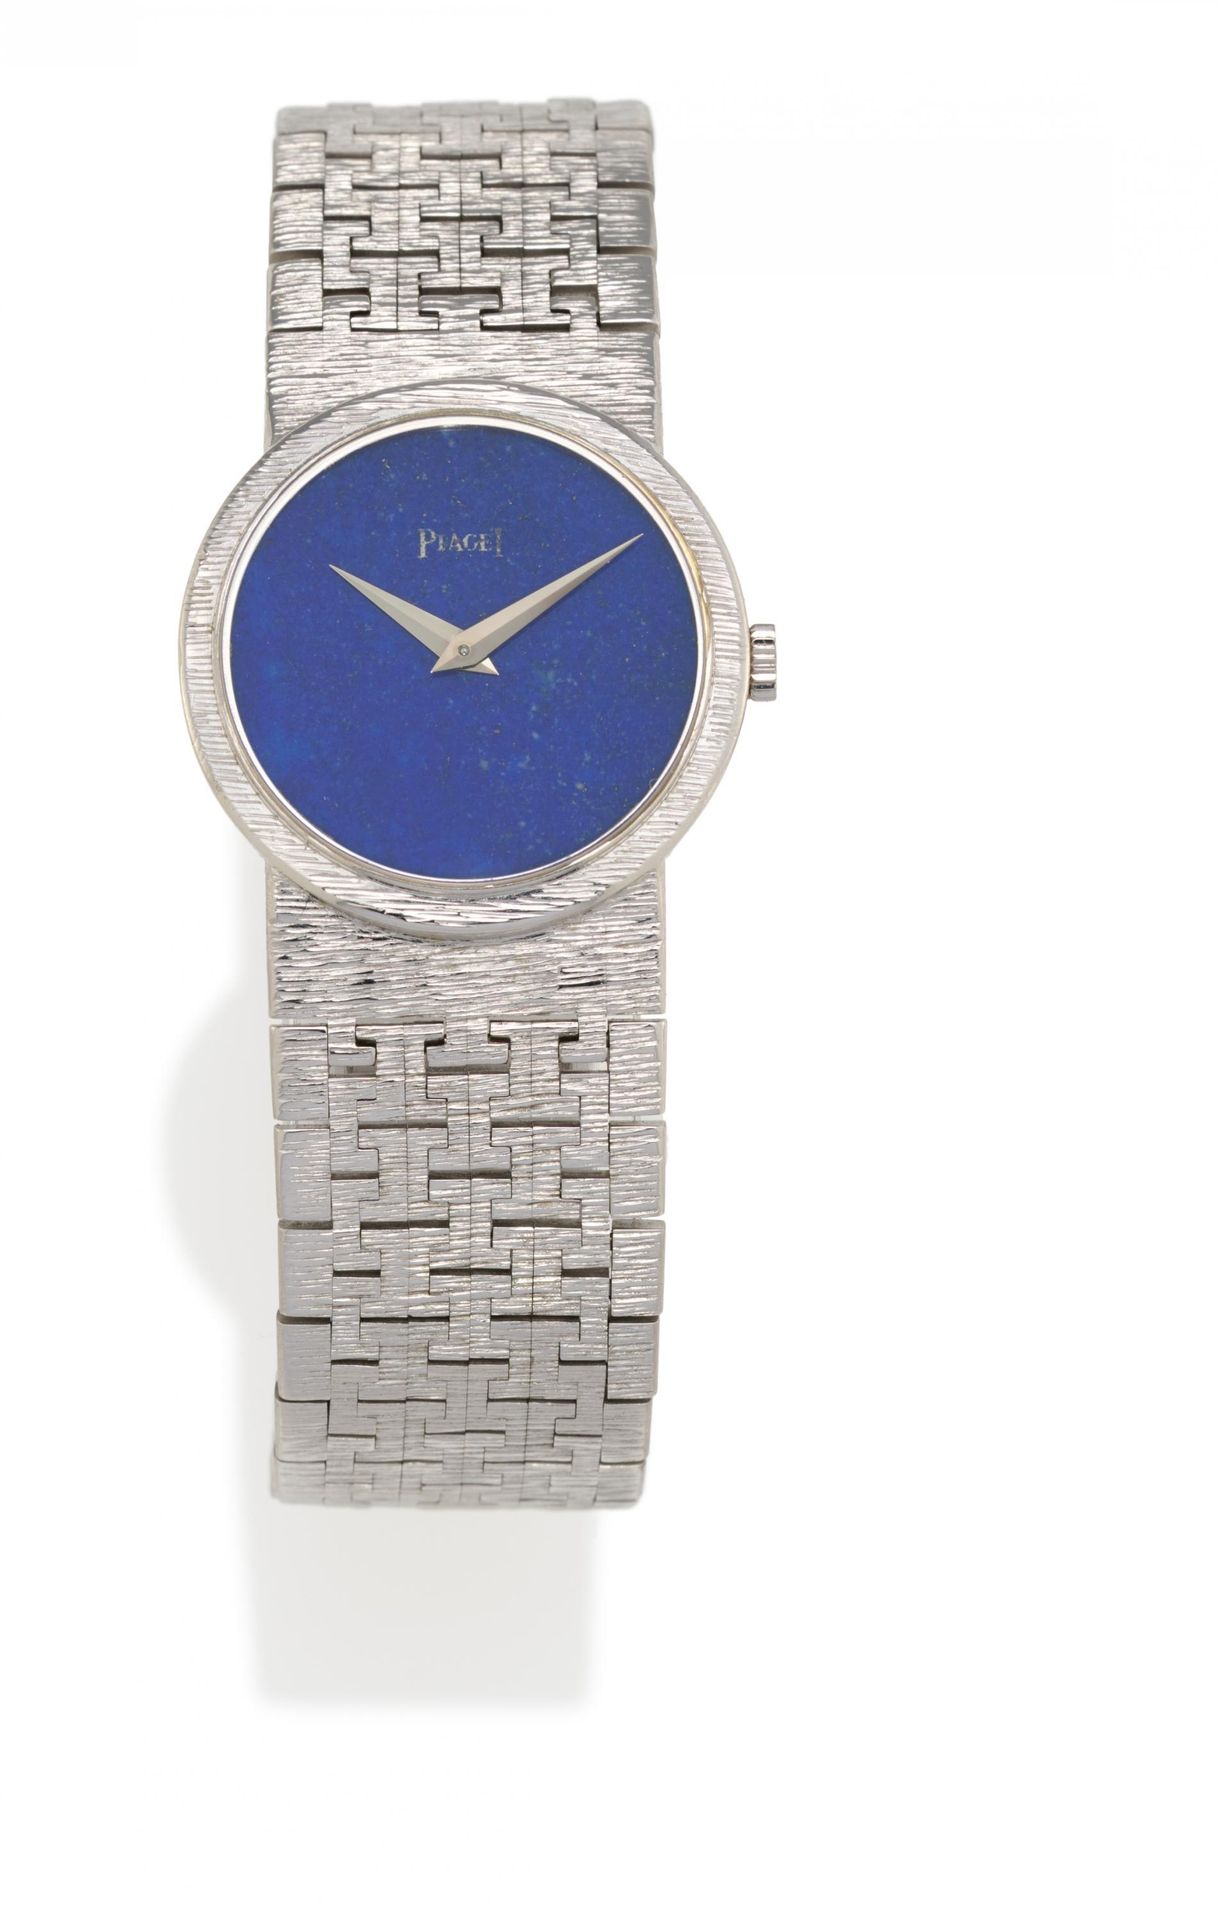 PIAGET PIAGET
Classique。手表。

原产地。 瑞士。
日期。 约。1970.
发条。手 动上链。
表壳/腕带： 750/-白金，表盘青金石&hellip;